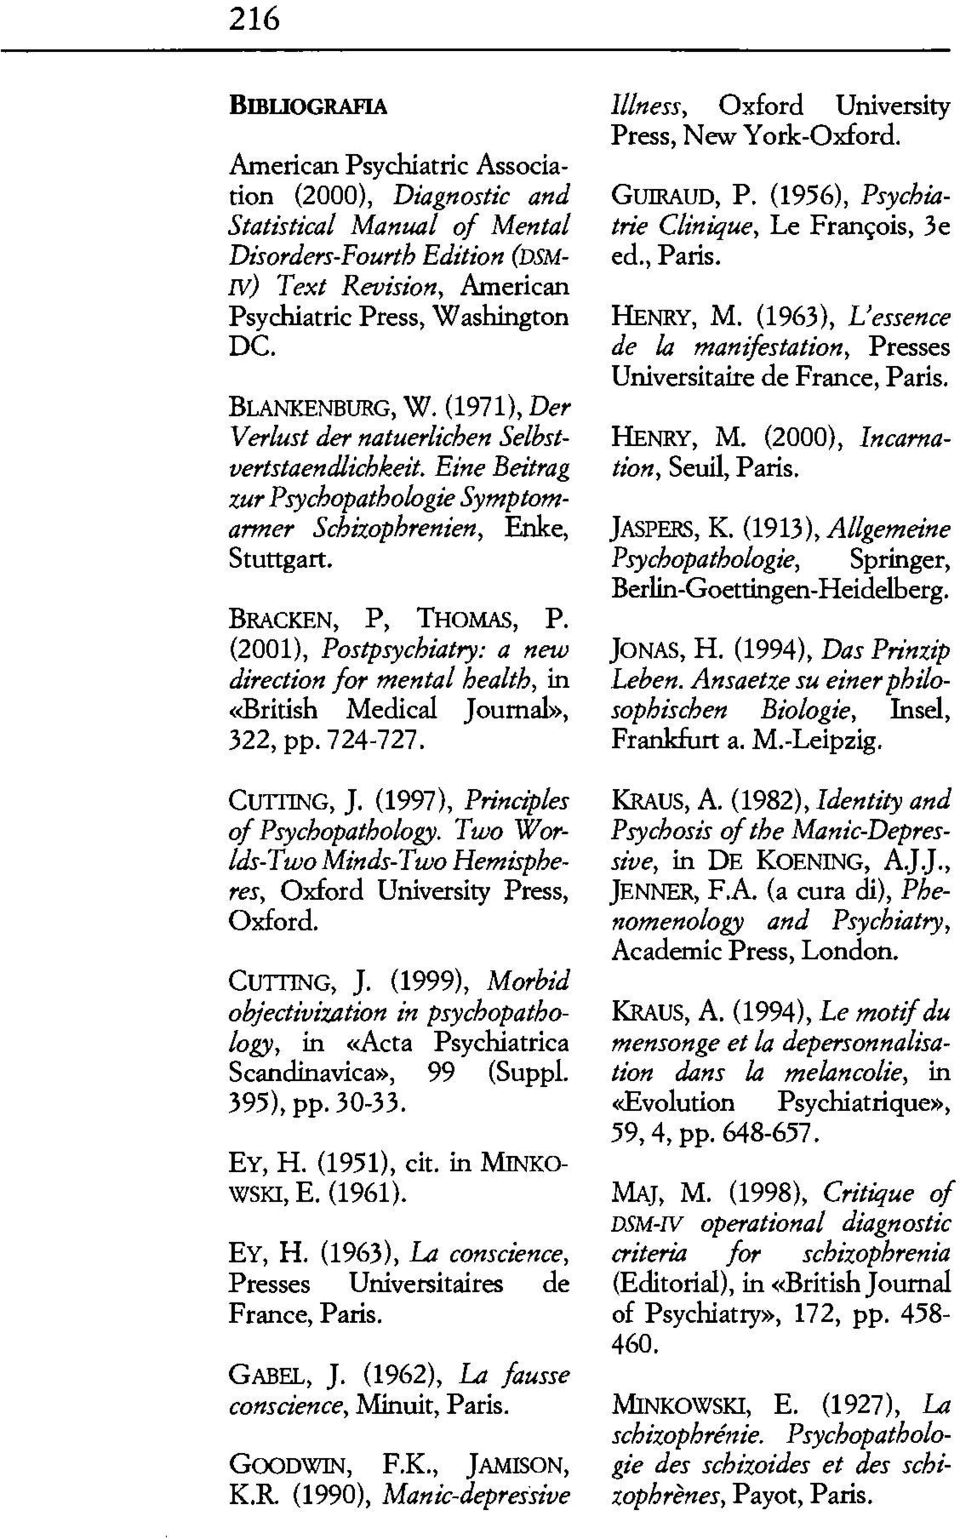 (2001), Postpsychiatry: a new direction /or menta! health, in <<British Medical Joumah>, 322, pp. 724-727. CUTI'ING, J. (1997), Principles o/ Psychopathology.